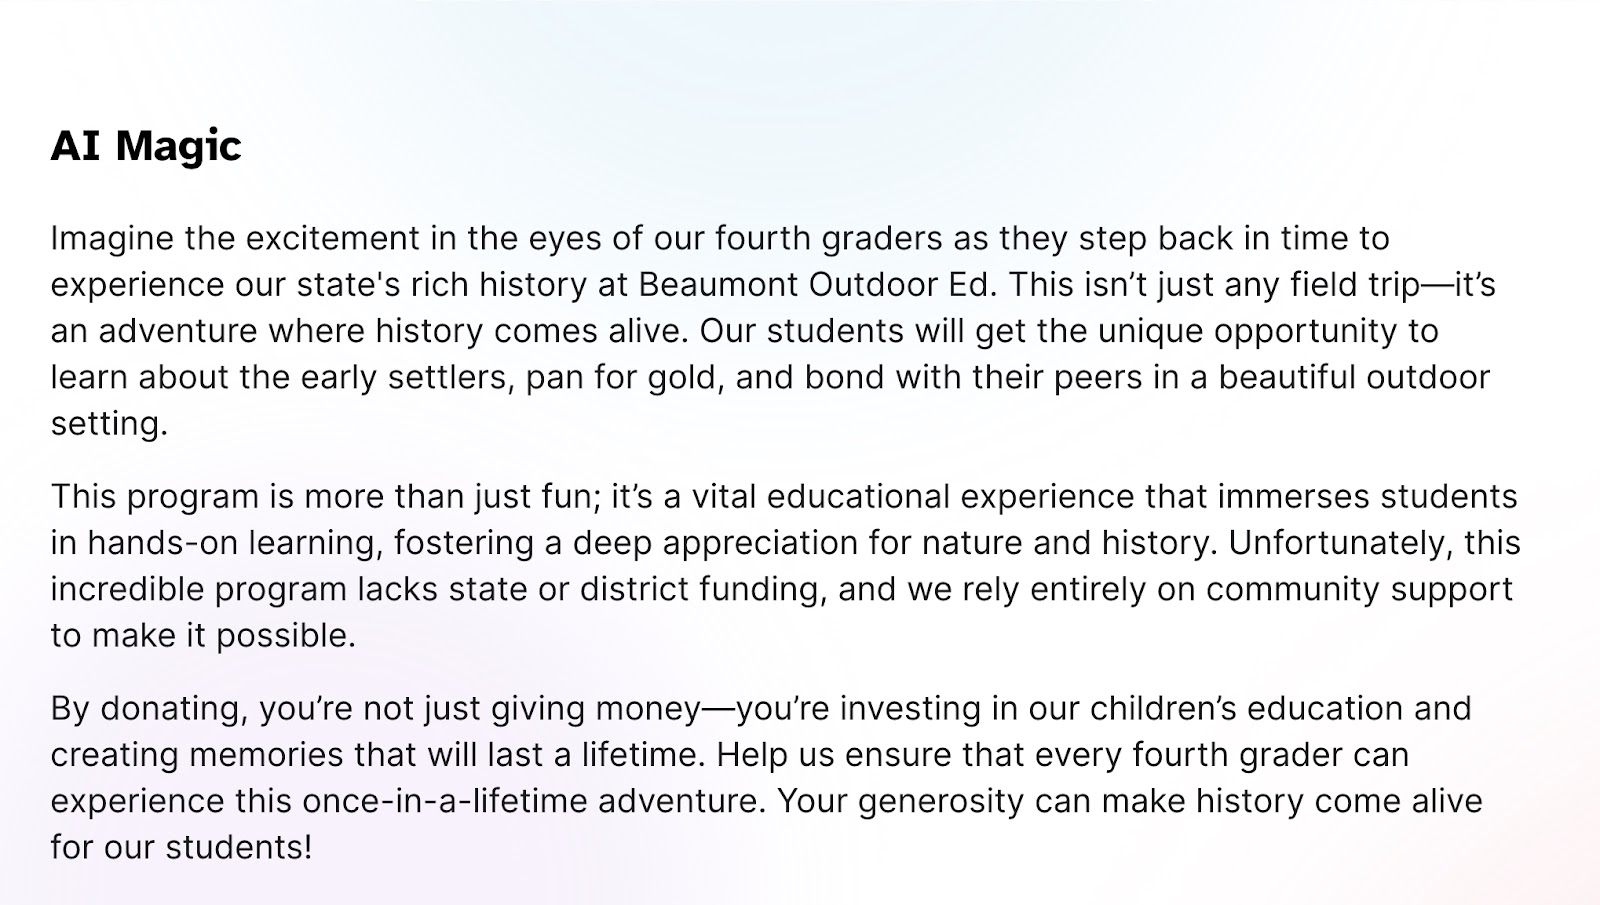 Description for FutureFund school fundraising campaign created with AI Magic tool